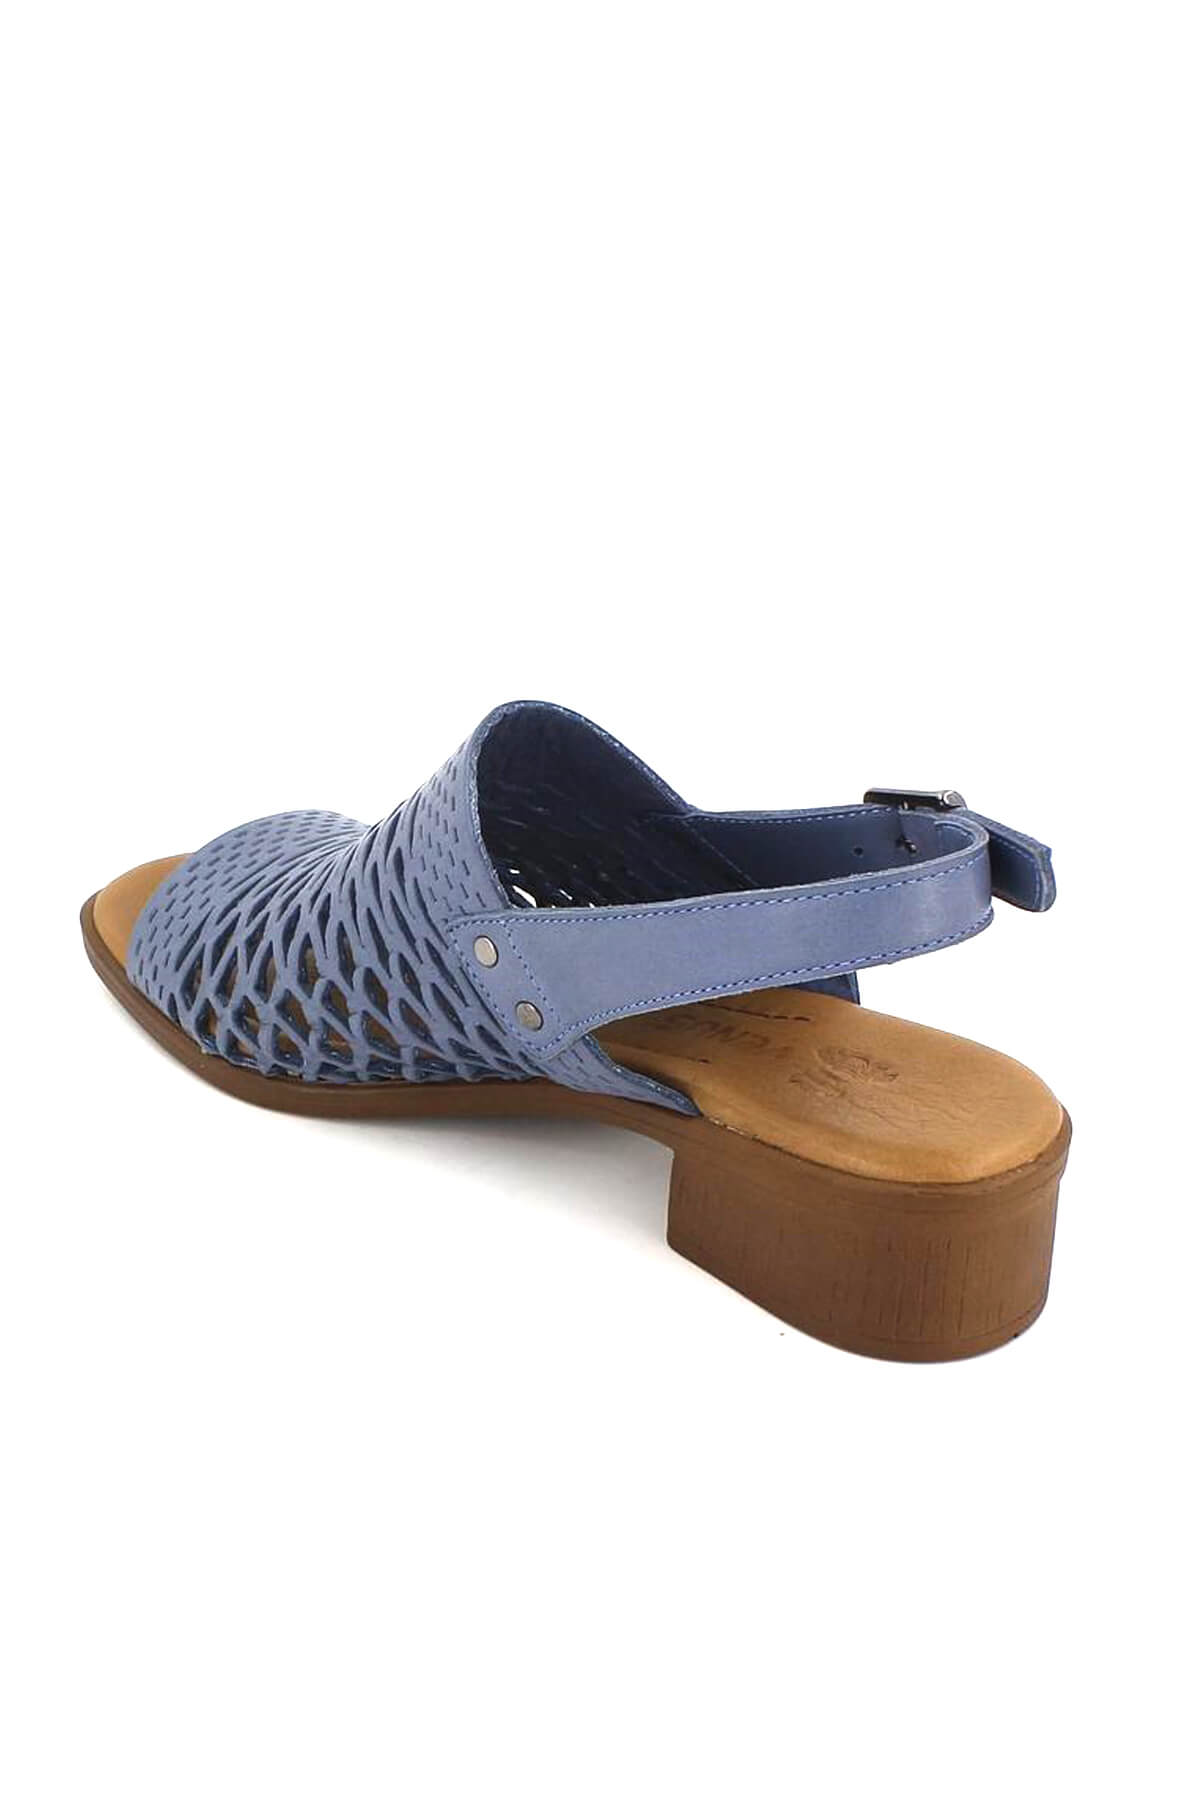 Kadın Topuklu Deri Sandalet Mavi 21986001 - Thumbnail